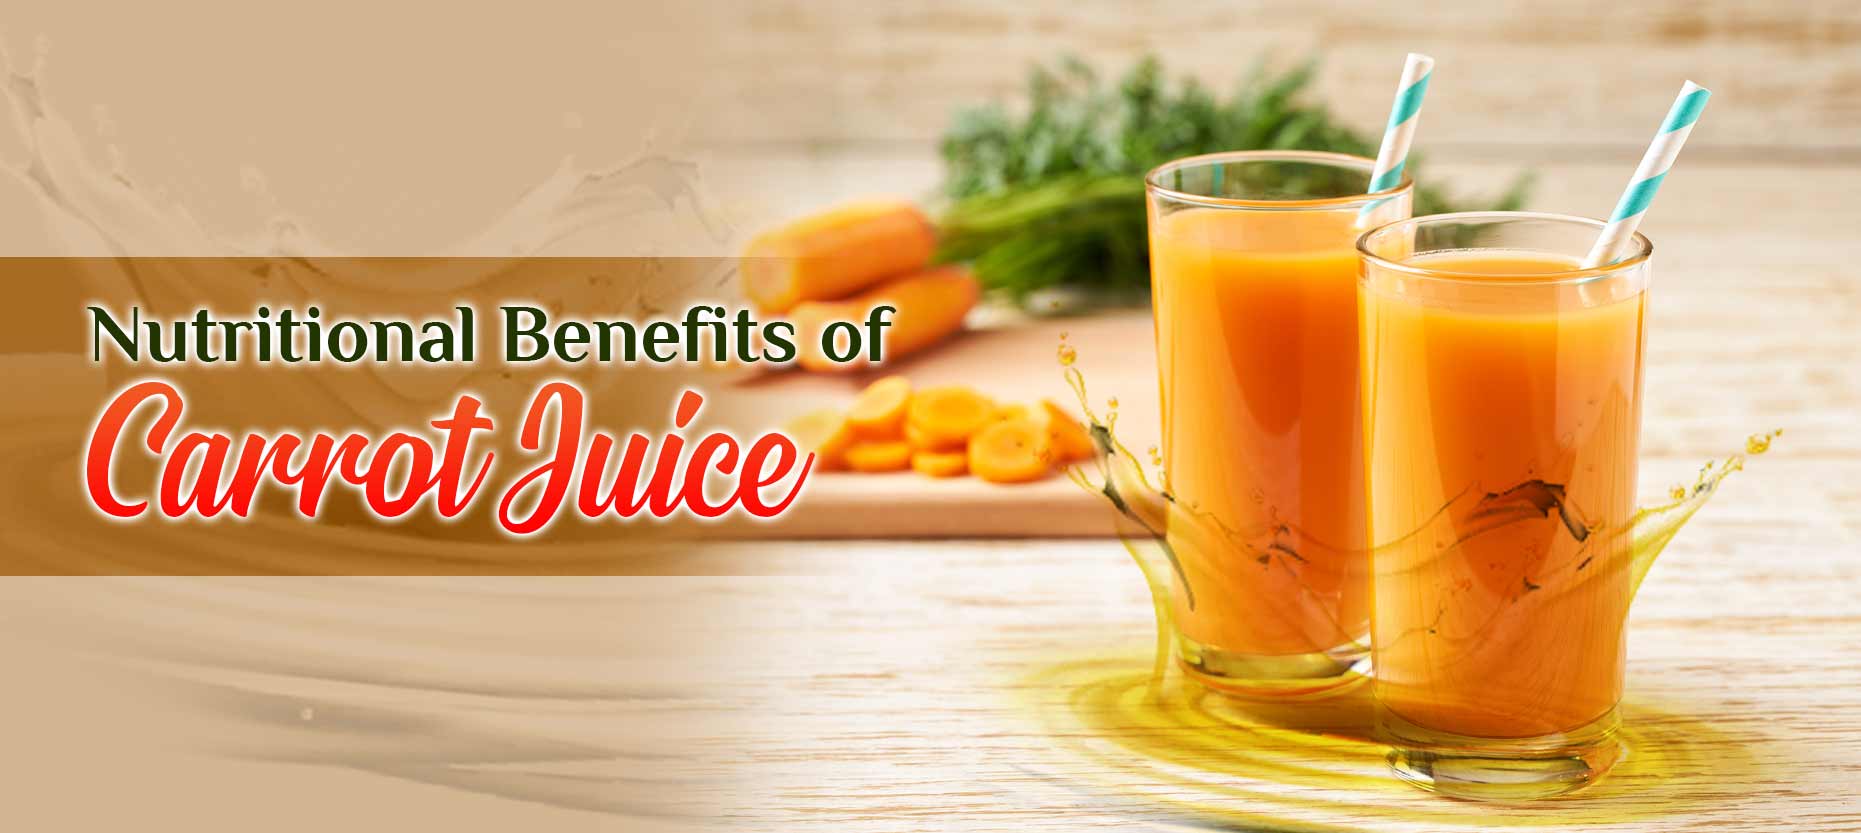 Nutritional Benefits of Carrot Juice